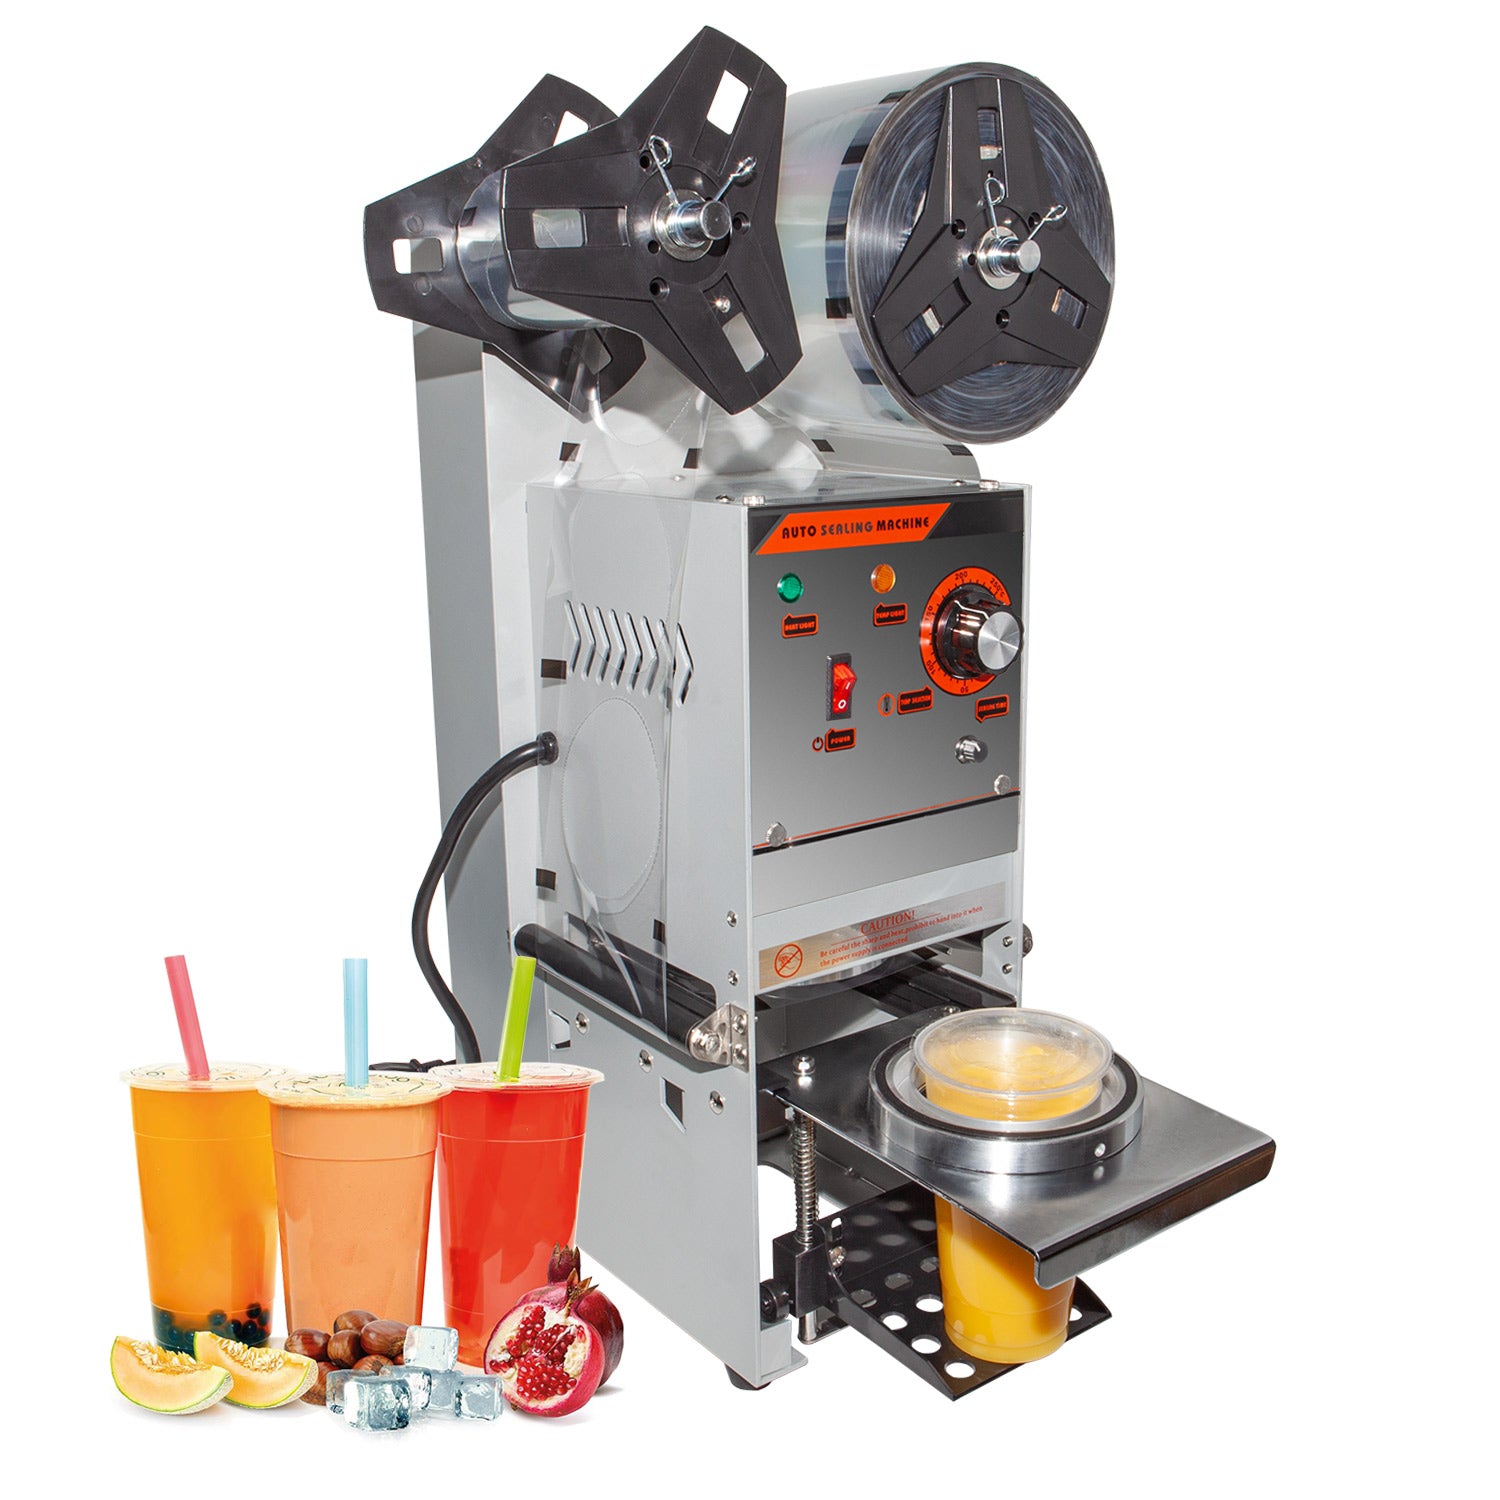 Automatic Bubble Tea Cup Sealing Machine,High Quality Sealing Machine